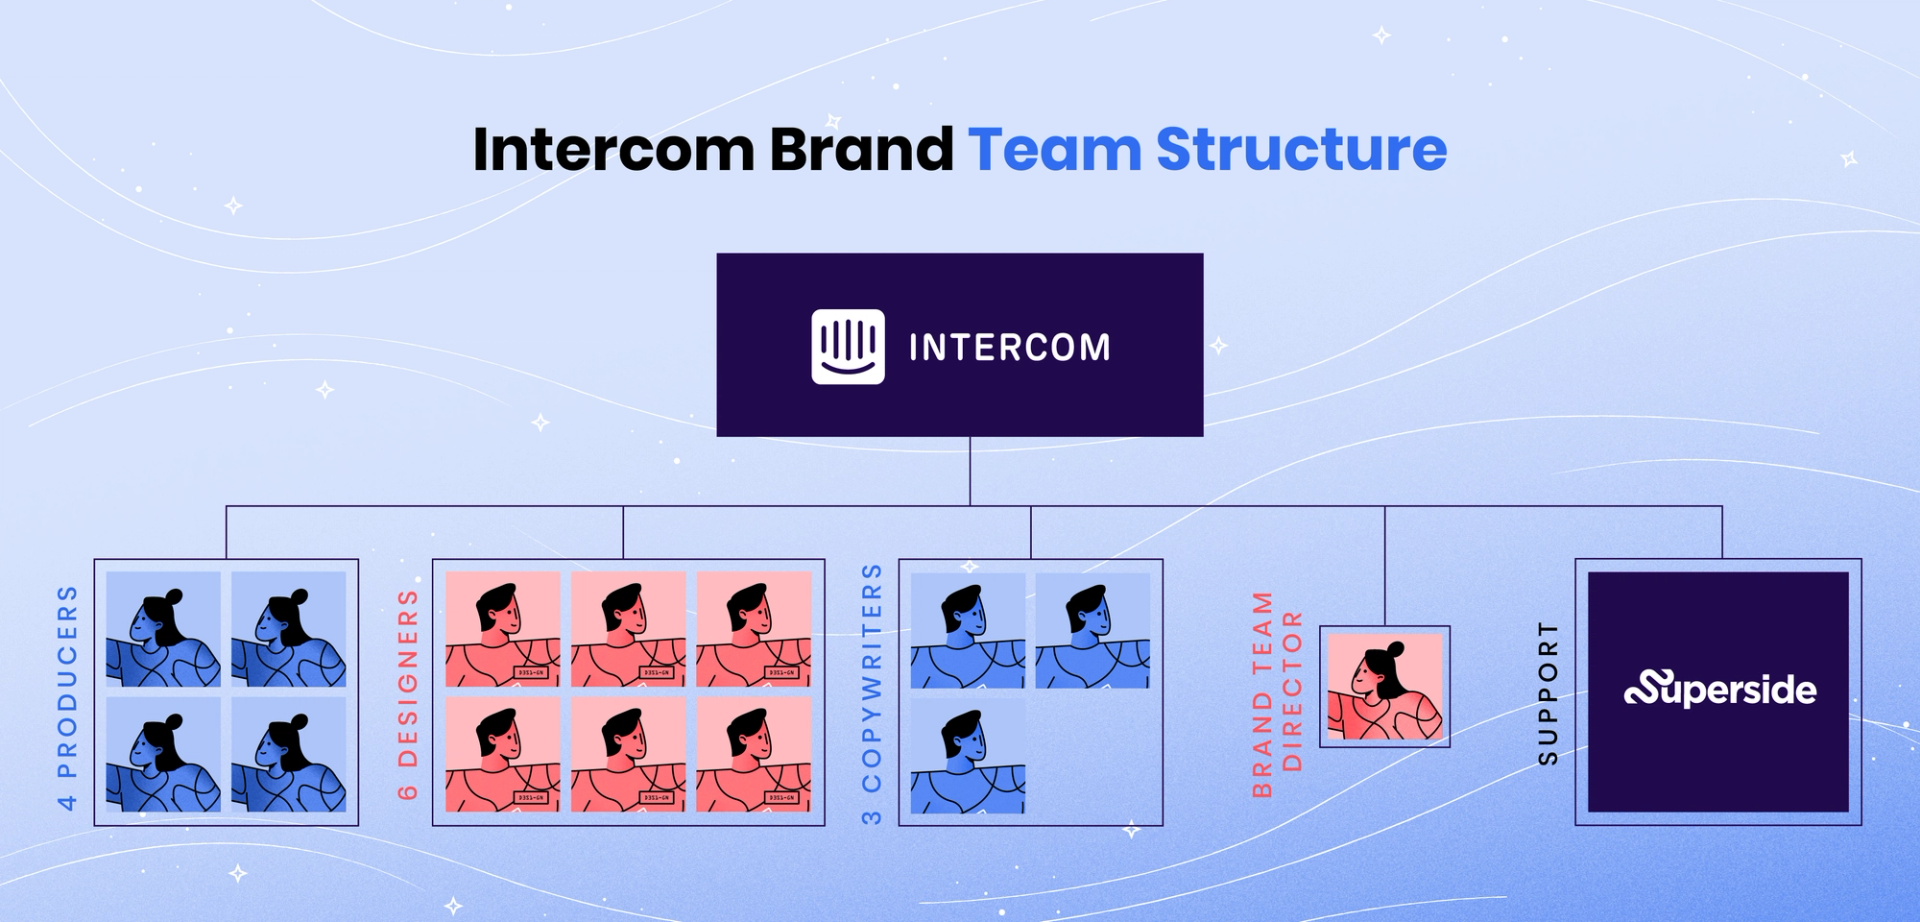 Intercom brand team structure